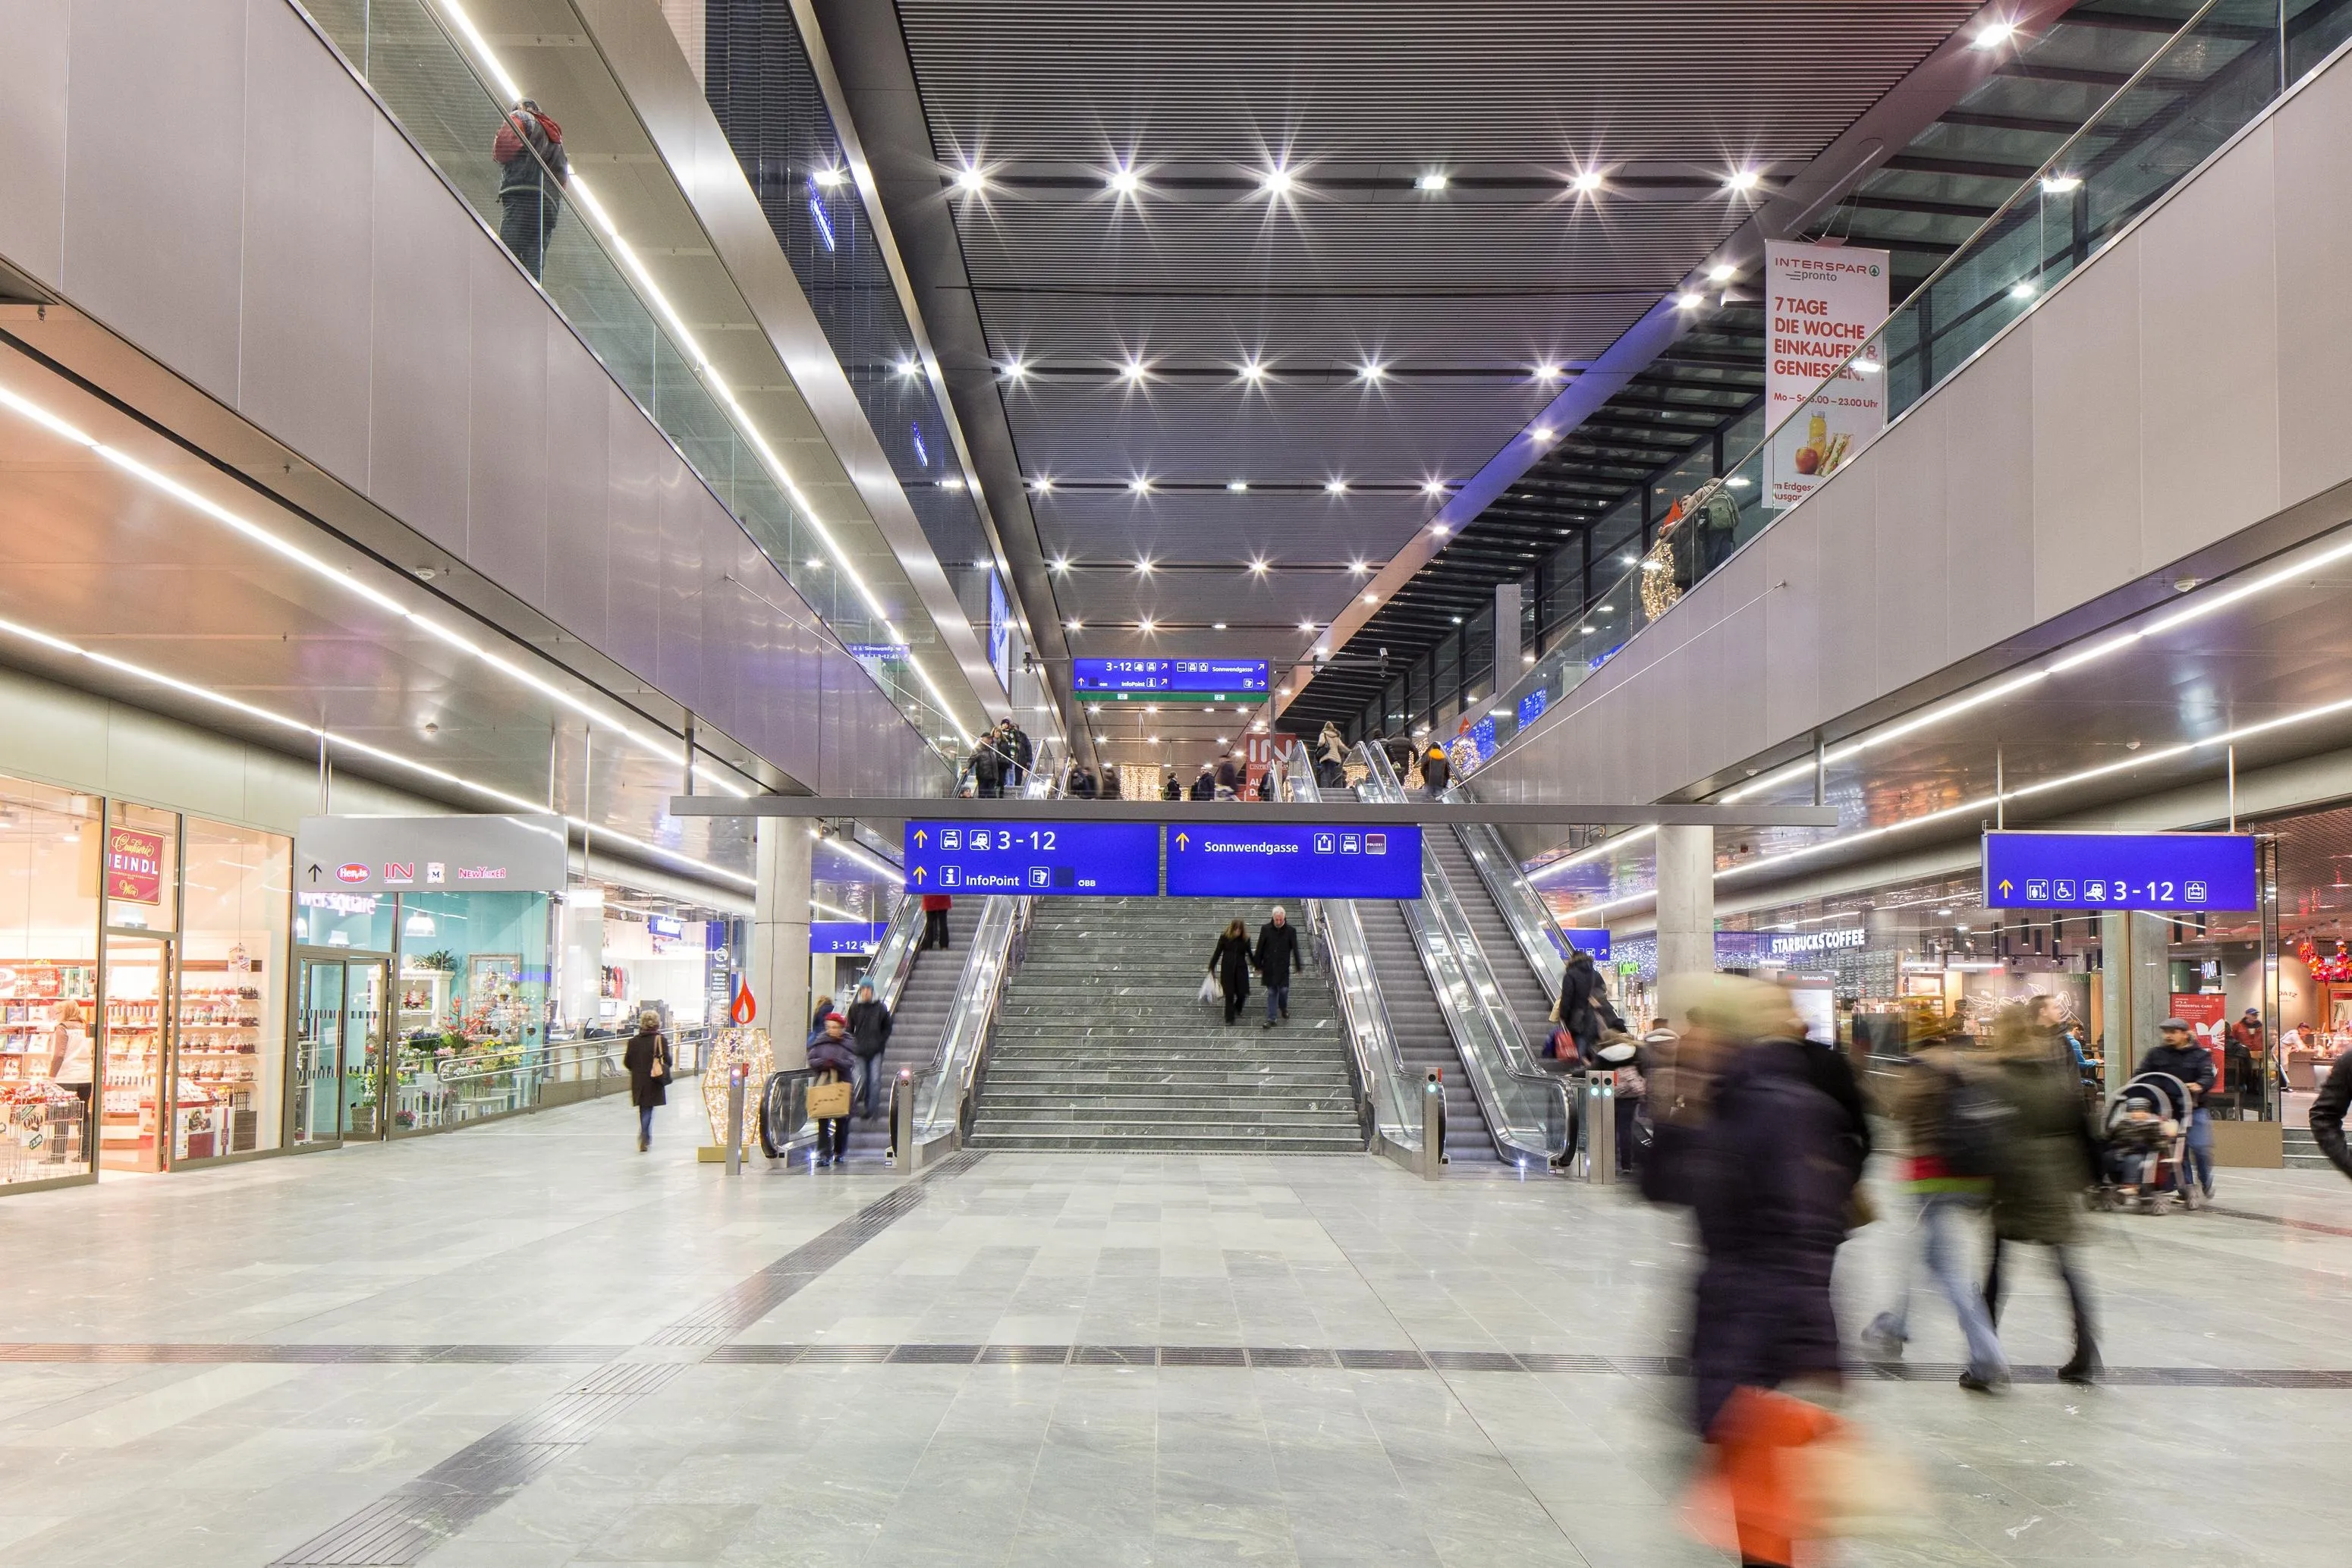 BahnhofCity Wien Hauptbahnhof in Austria, europe | Handbags,Shoes,Clothes,Watches,Travel Bags - Country Helper